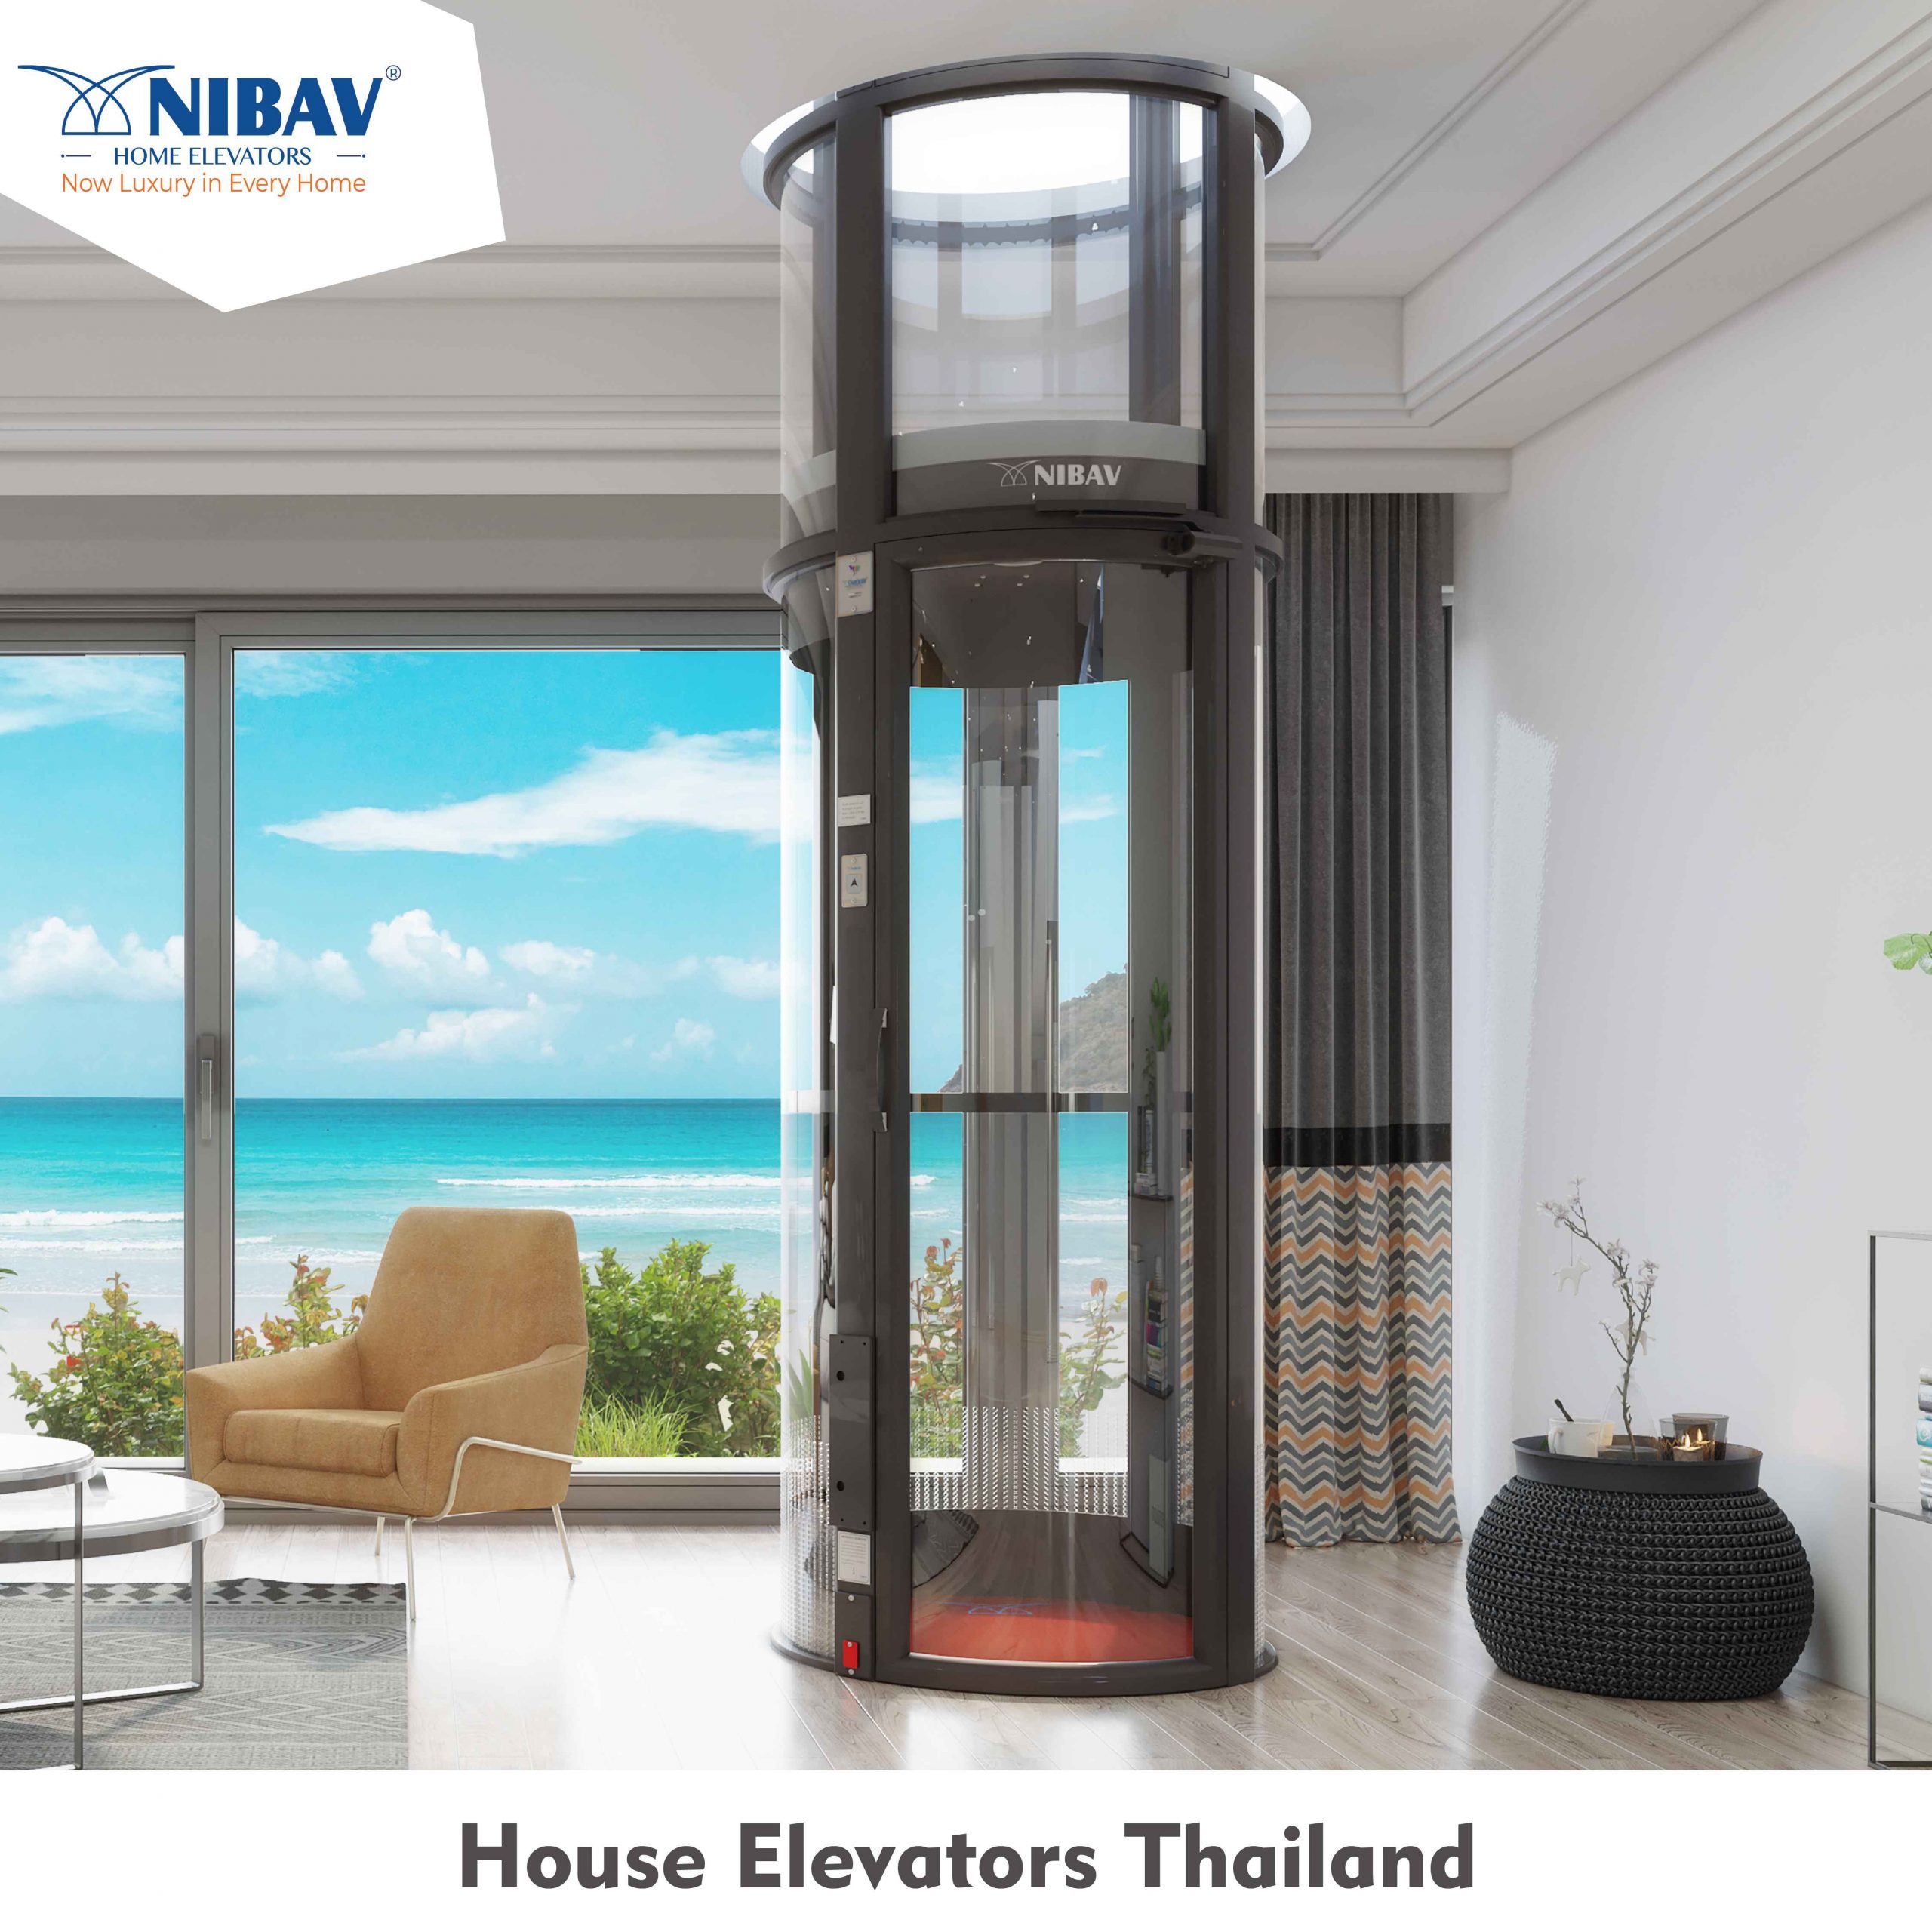 House elevators Thailand